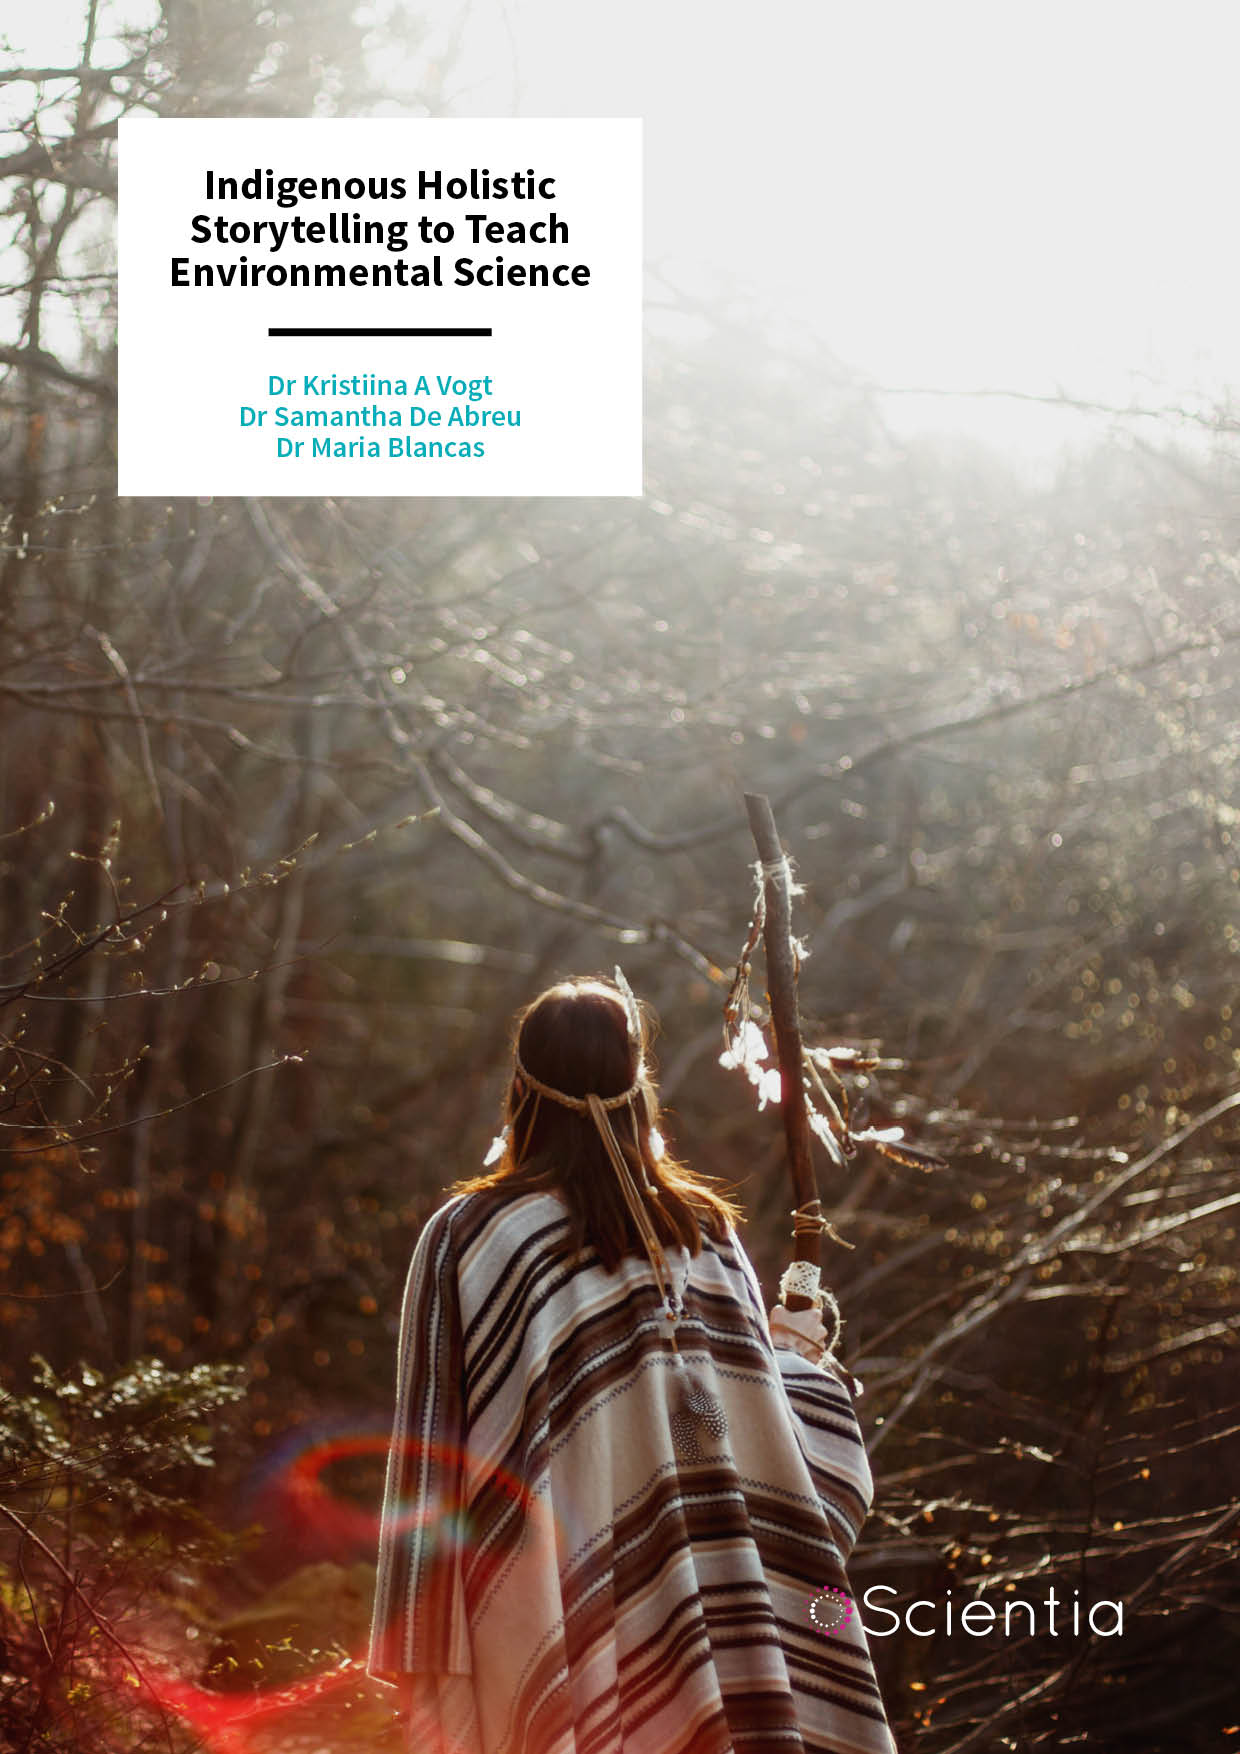 Dr Kristiina A. Vogt | Dr Samantha De Abreu | Dr Maria Blancas – Indigenous Holistic Storytelling to Teach Environmental Science